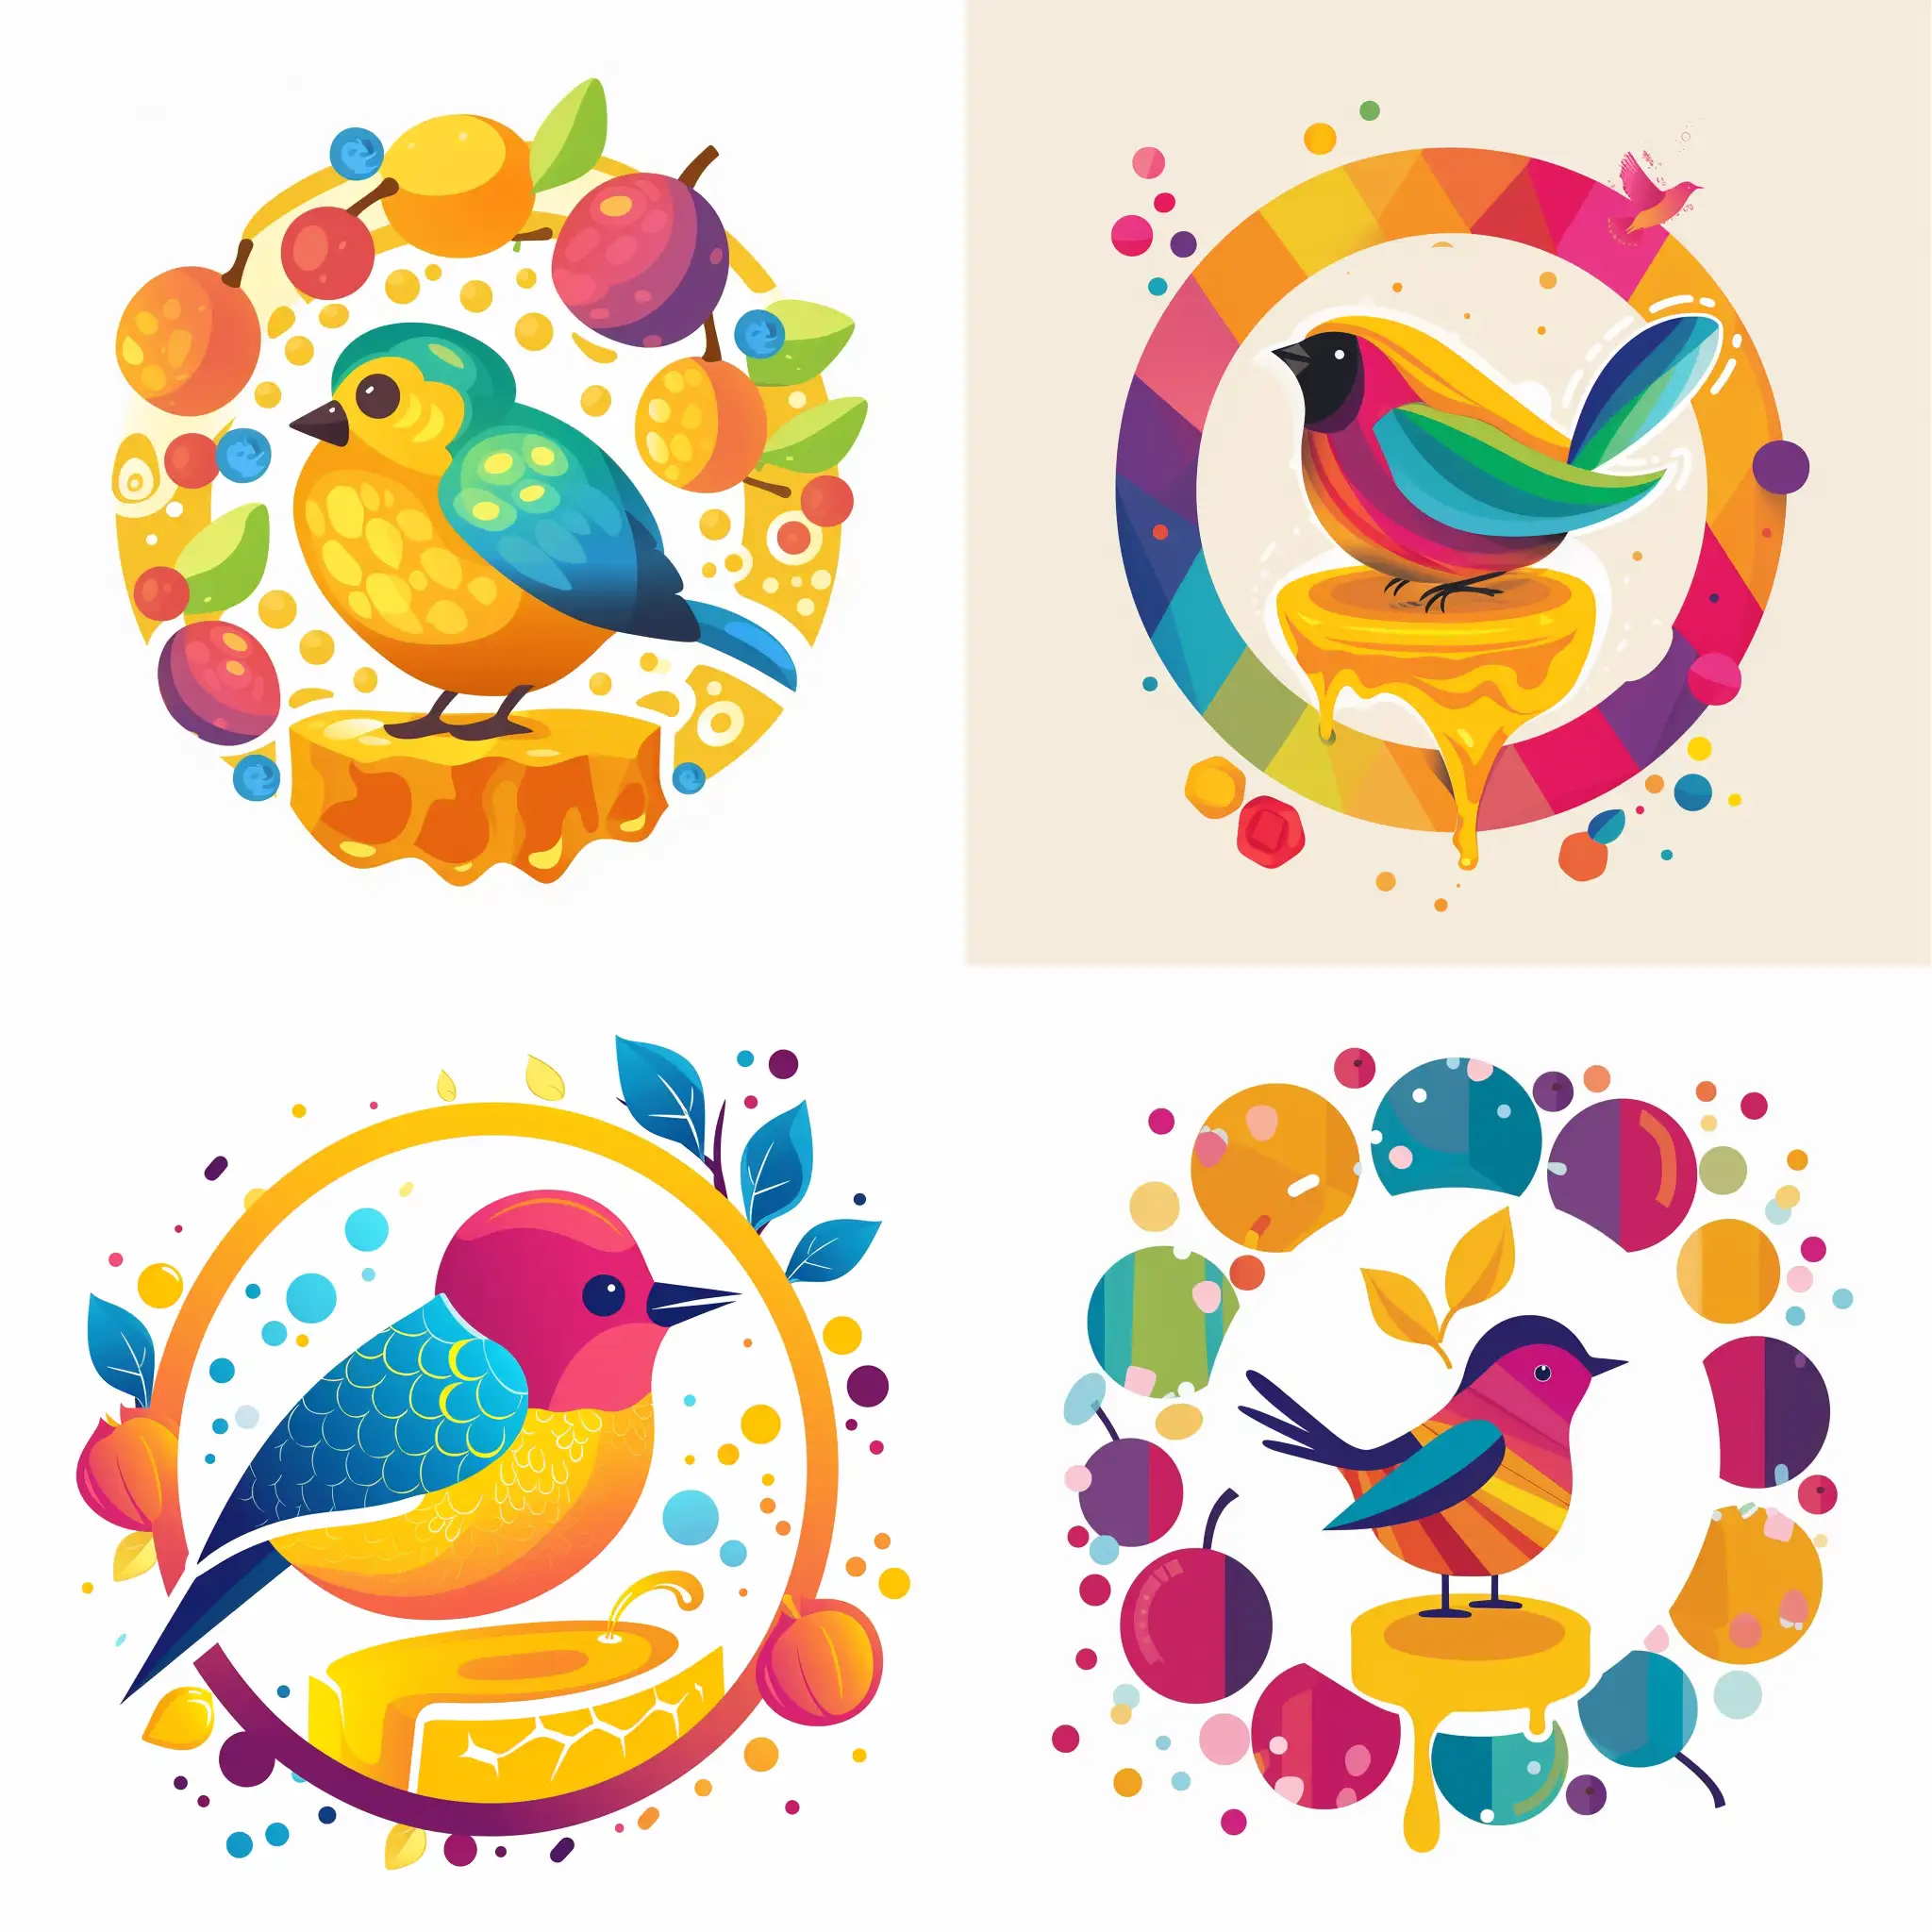 Cheerful-Bird-amidst-Vibrant-Honey-and-Olives-Circular-Logo